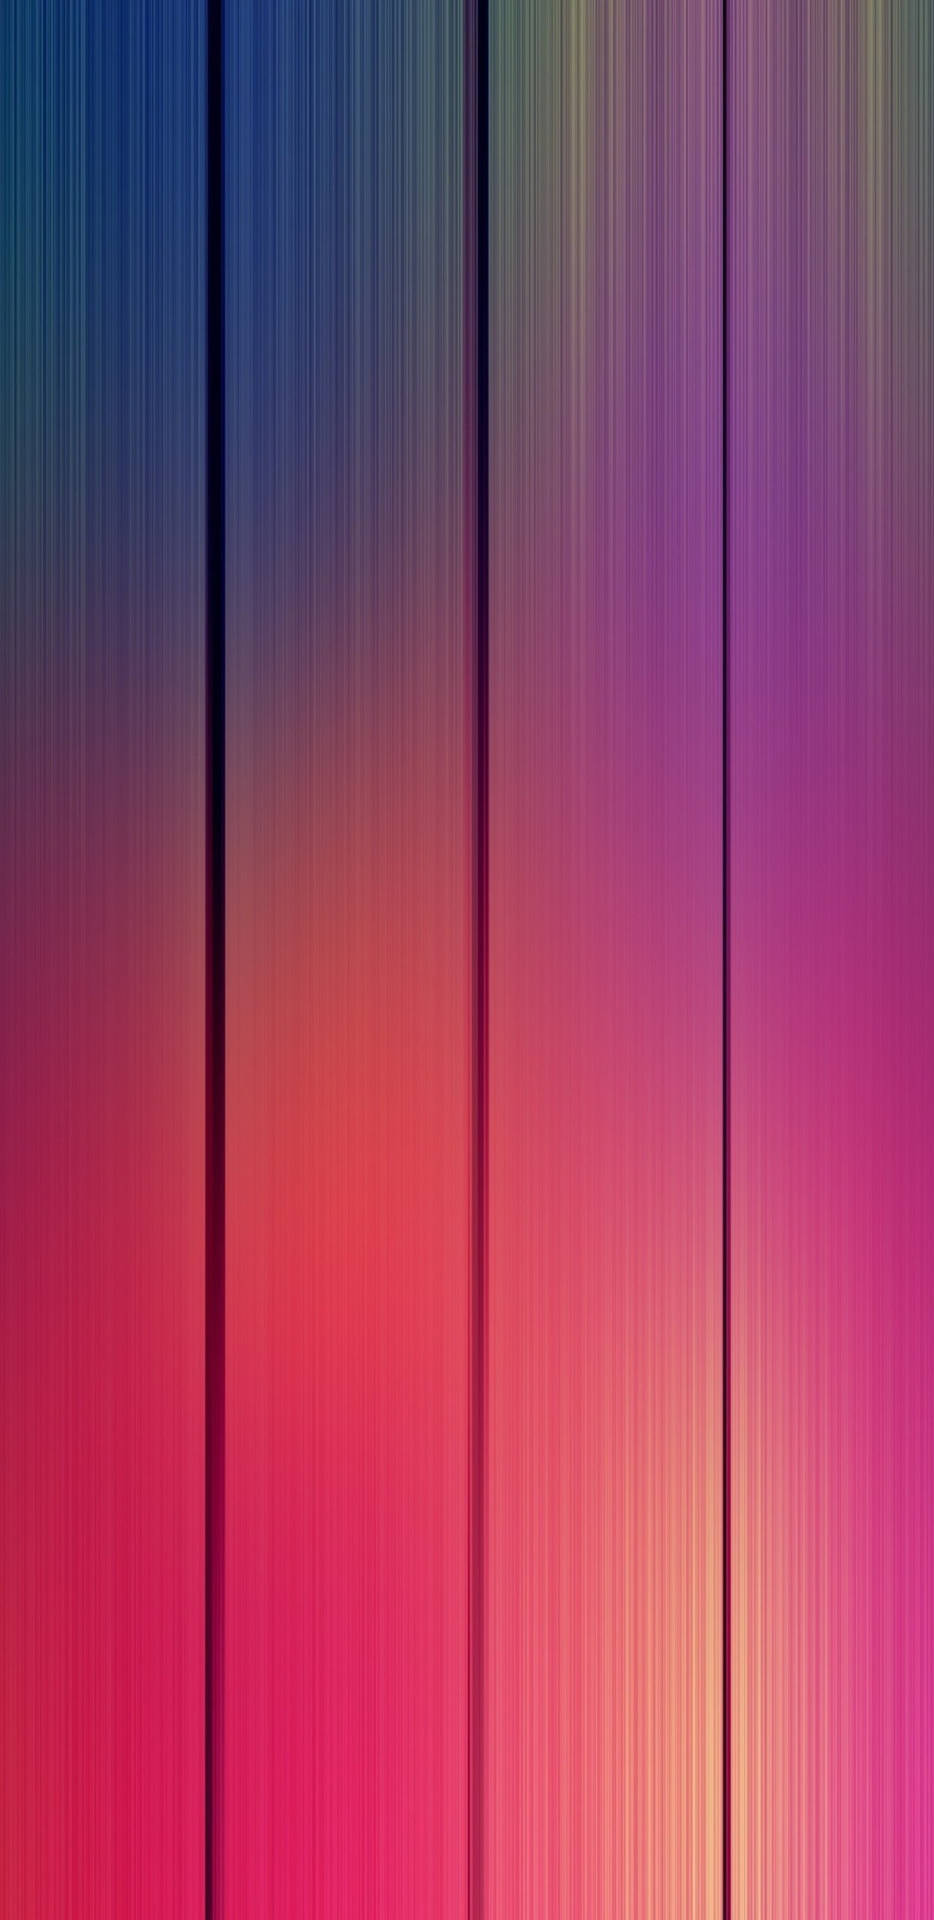 Pixel 3 Xl Colorful Wood Panels Wallpaper